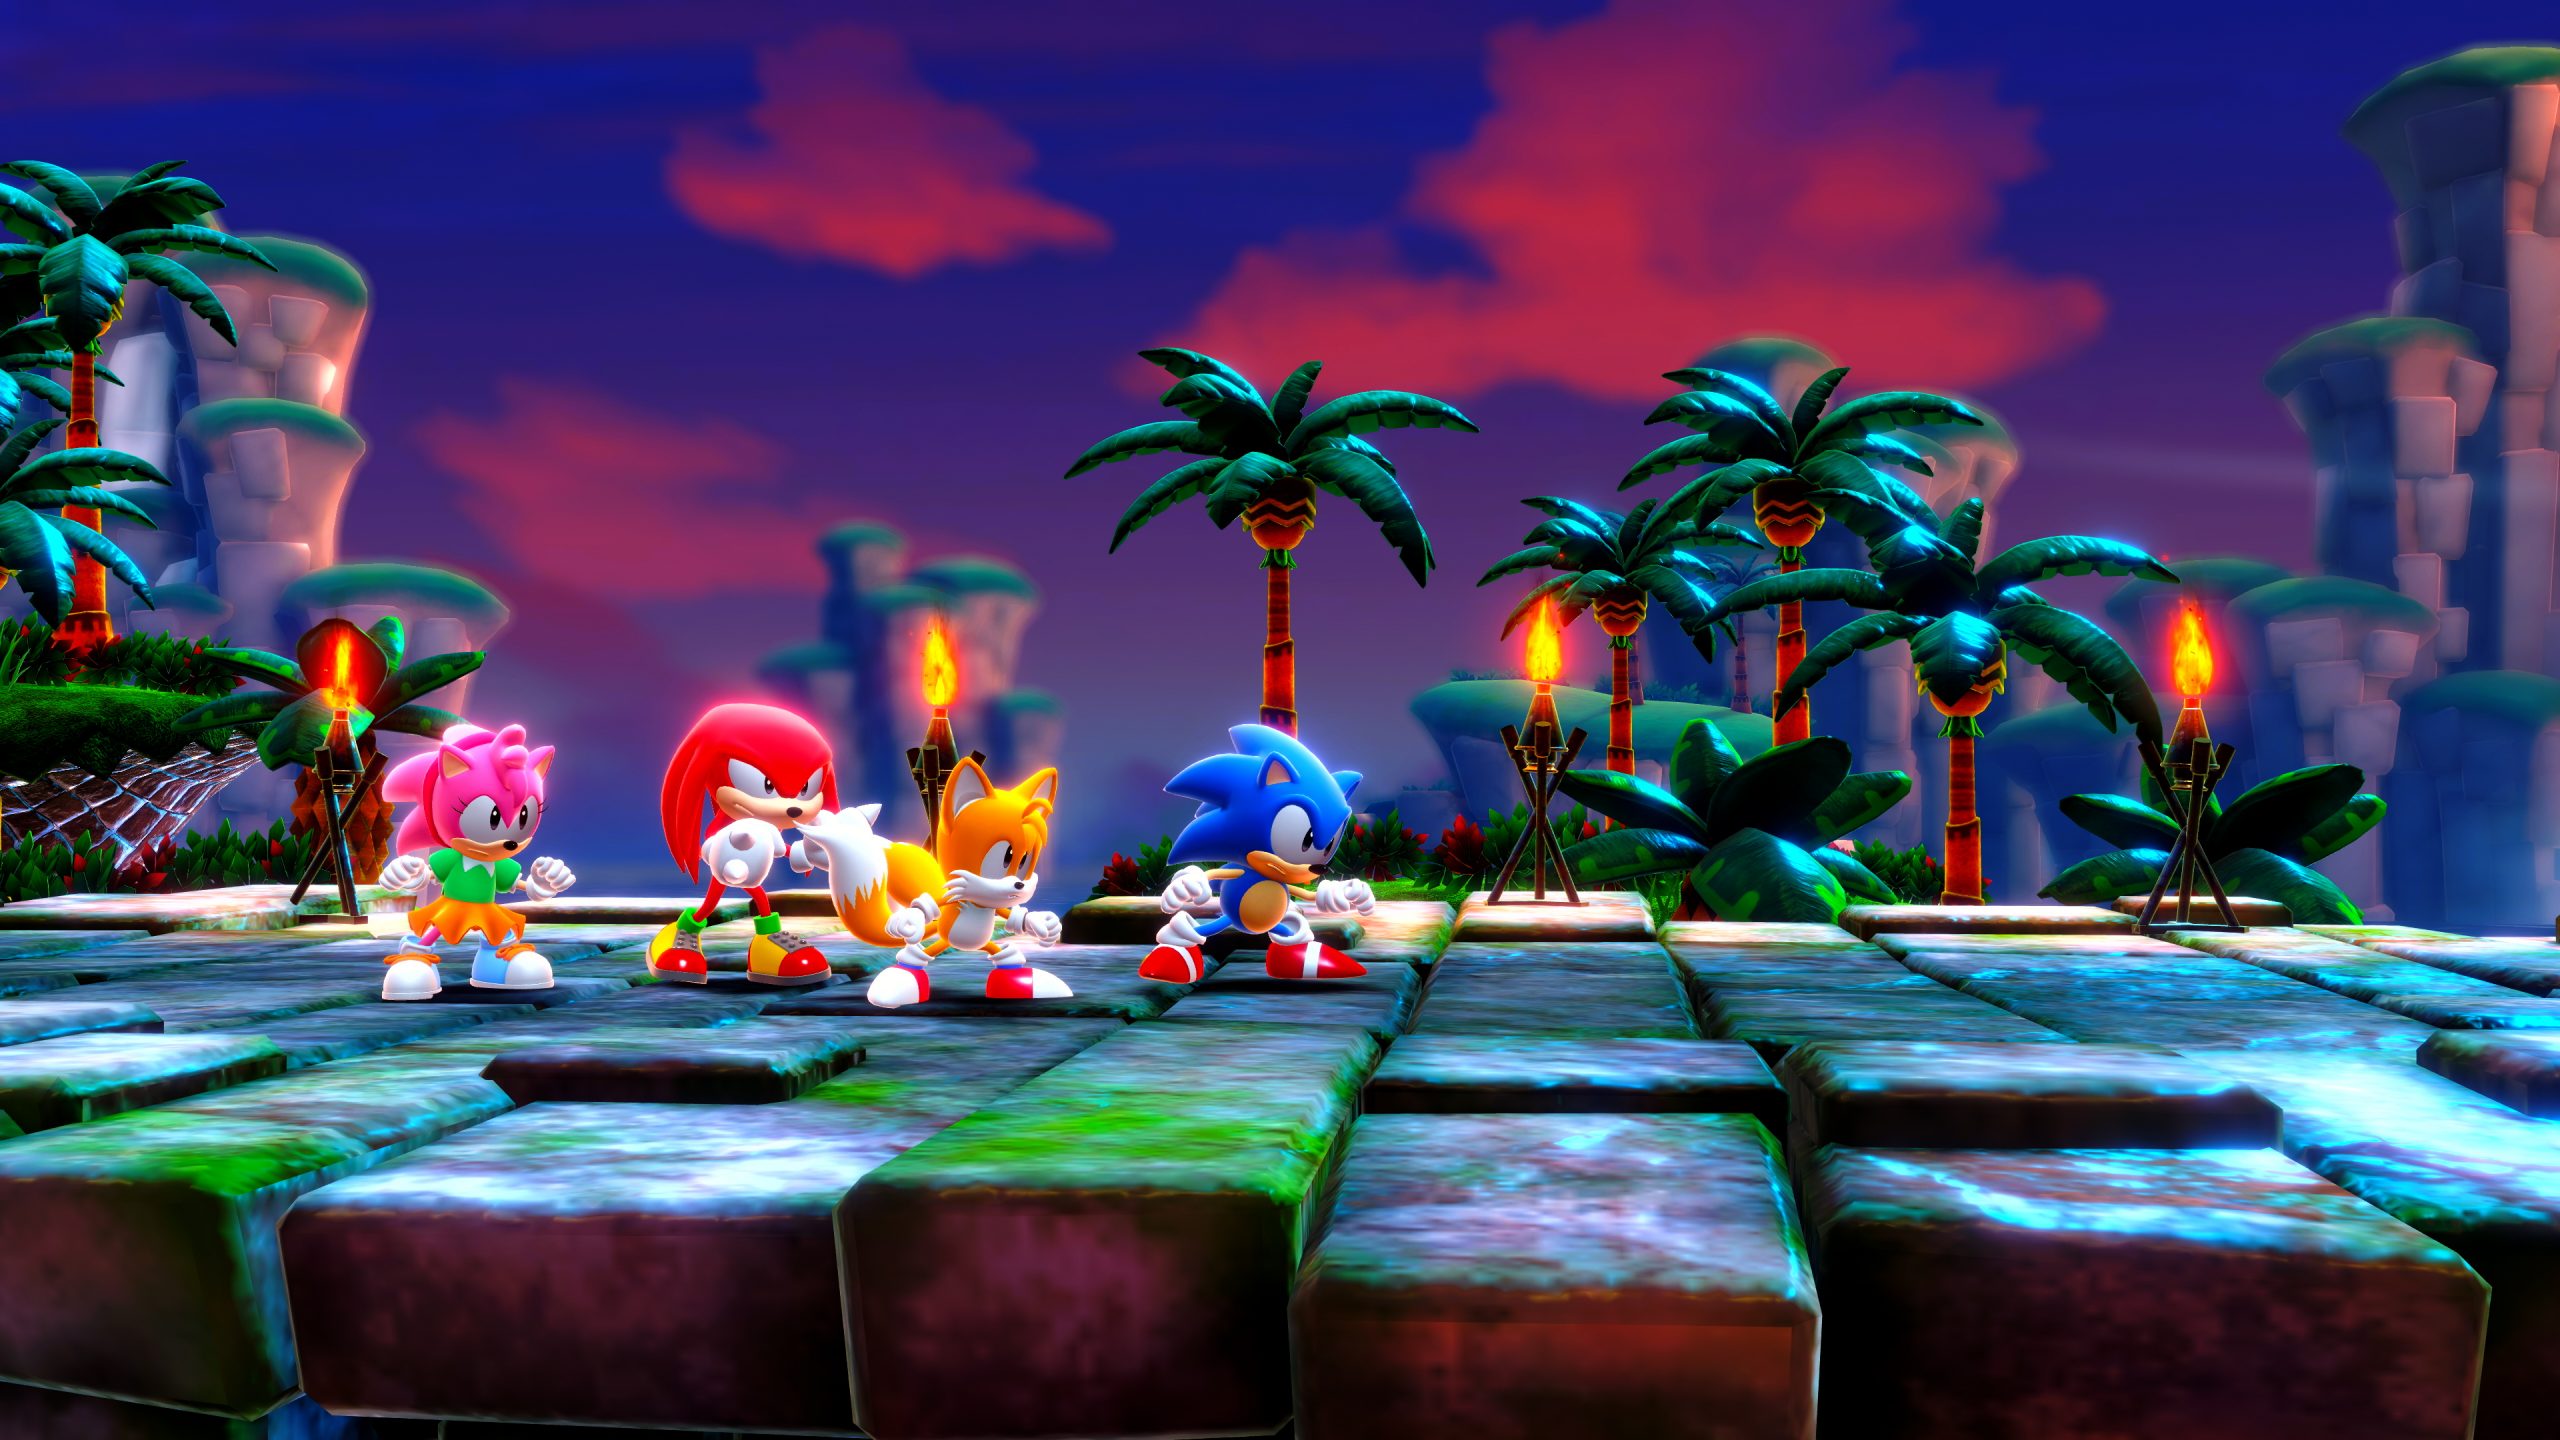 Sonic Superstars - Wikipedia